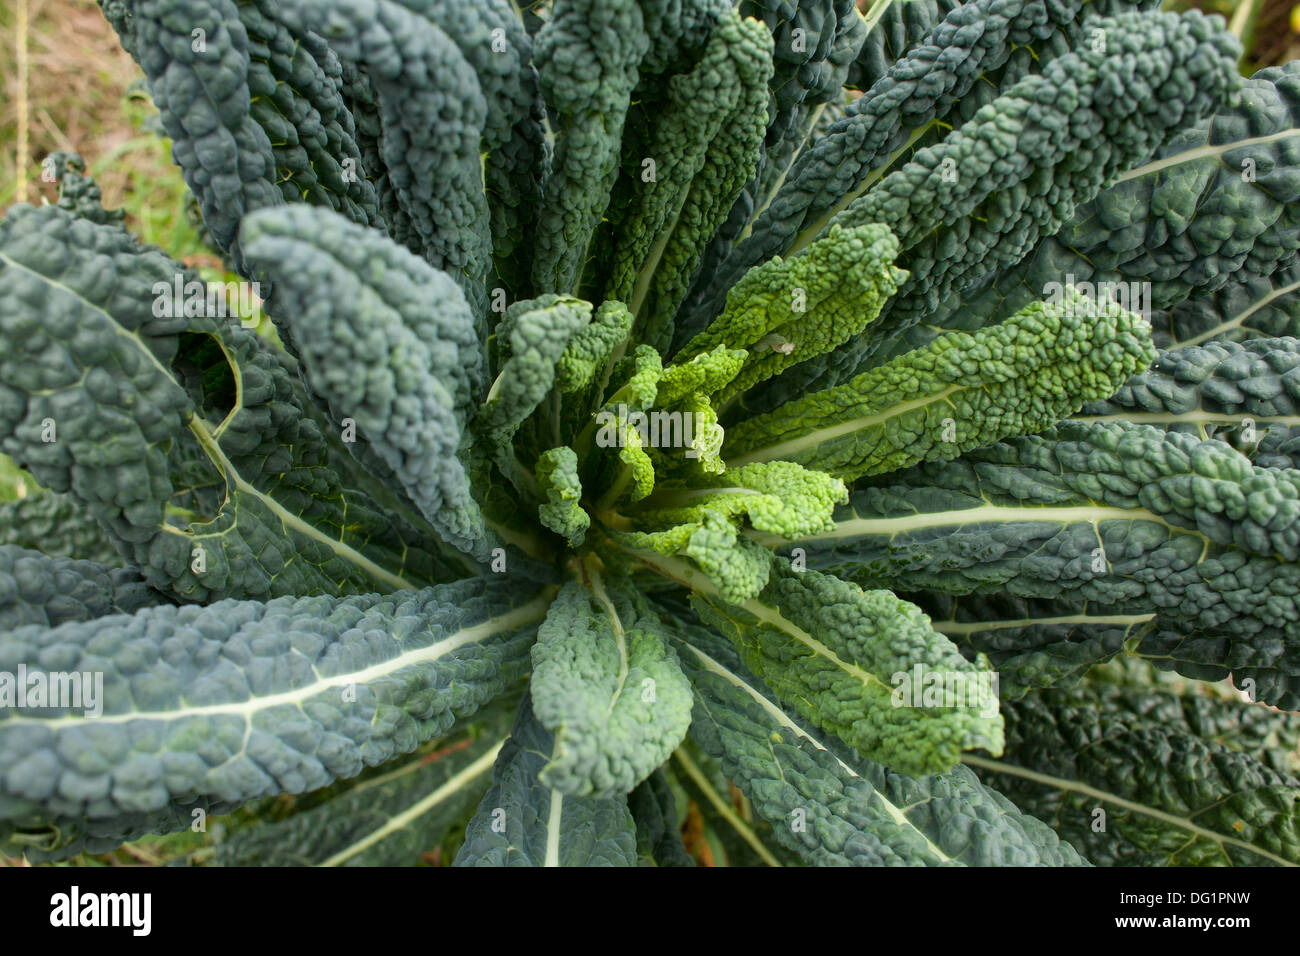 This healthy dinosaur kale grows in the garden  -- also known as Tuscan kale, lacinato kale, black kale, or cavolo nero. Stock Photo